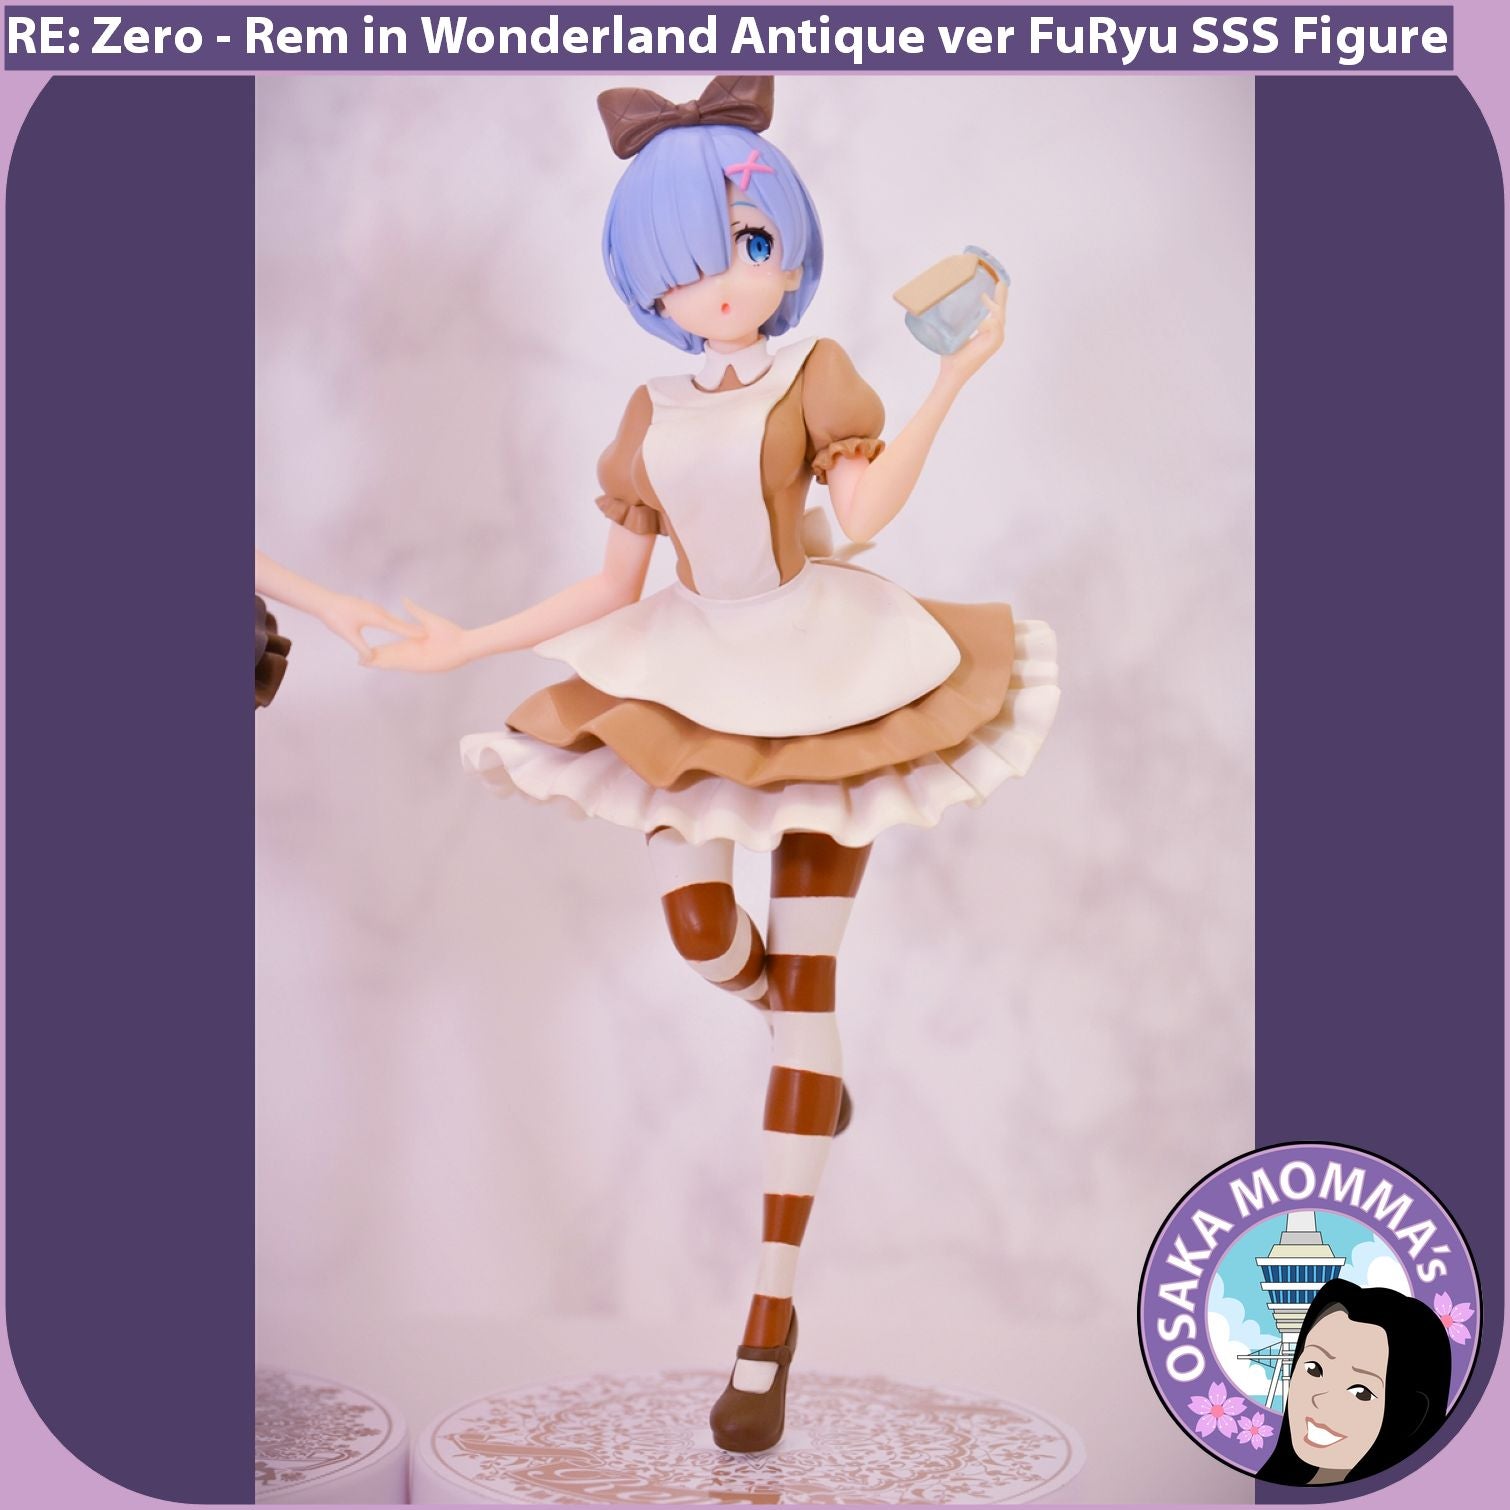 Rem in Wonderland Antique Ver. FuRyu Figure